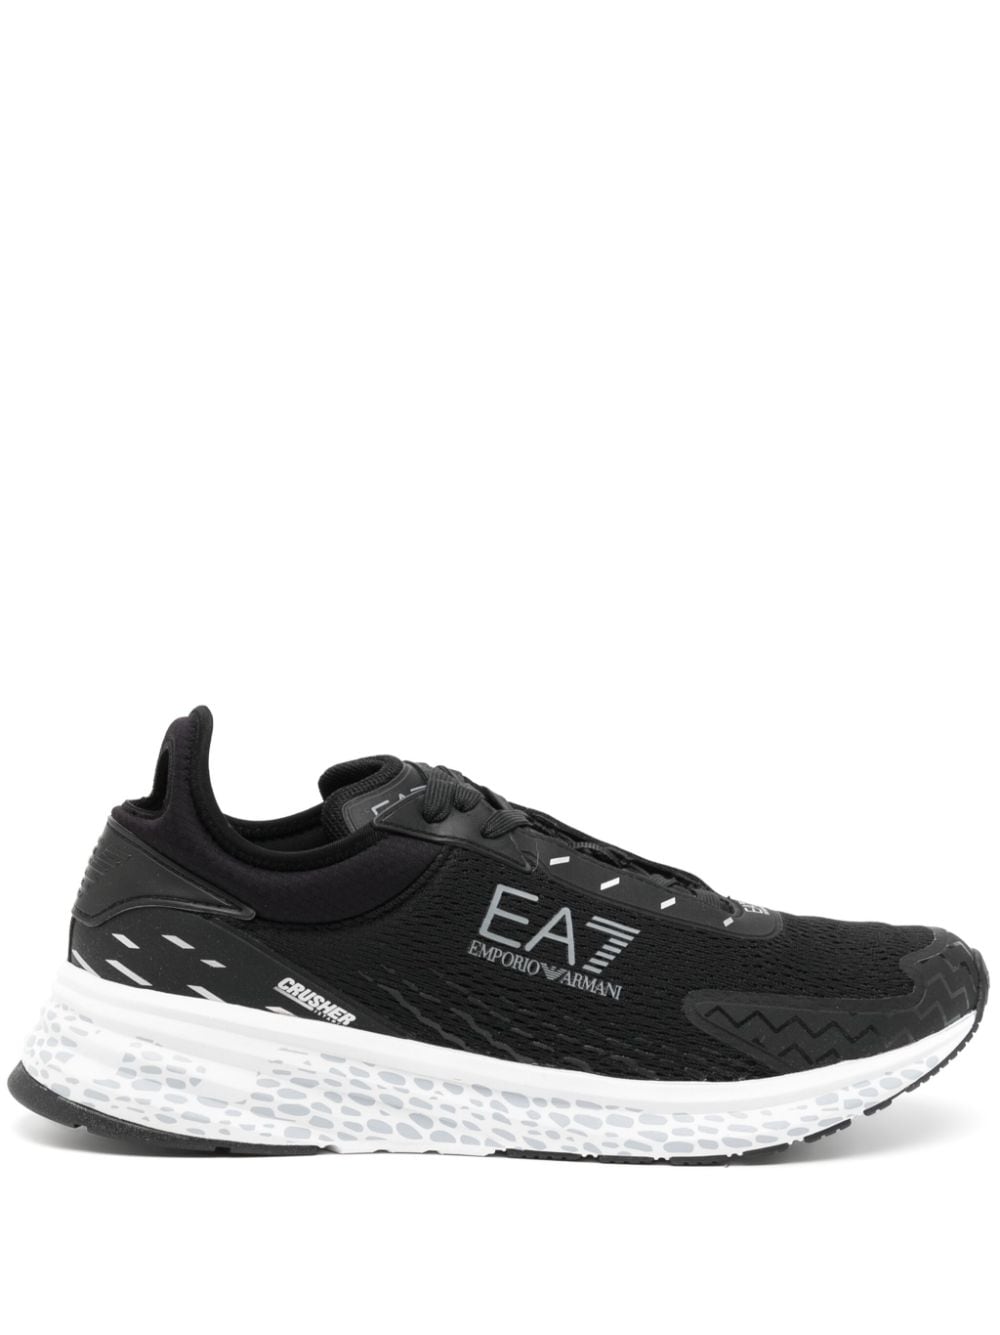 Ea7 Emporio Armani Crusher Distance low-top sneakers - Black von Ea7 Emporio Armani